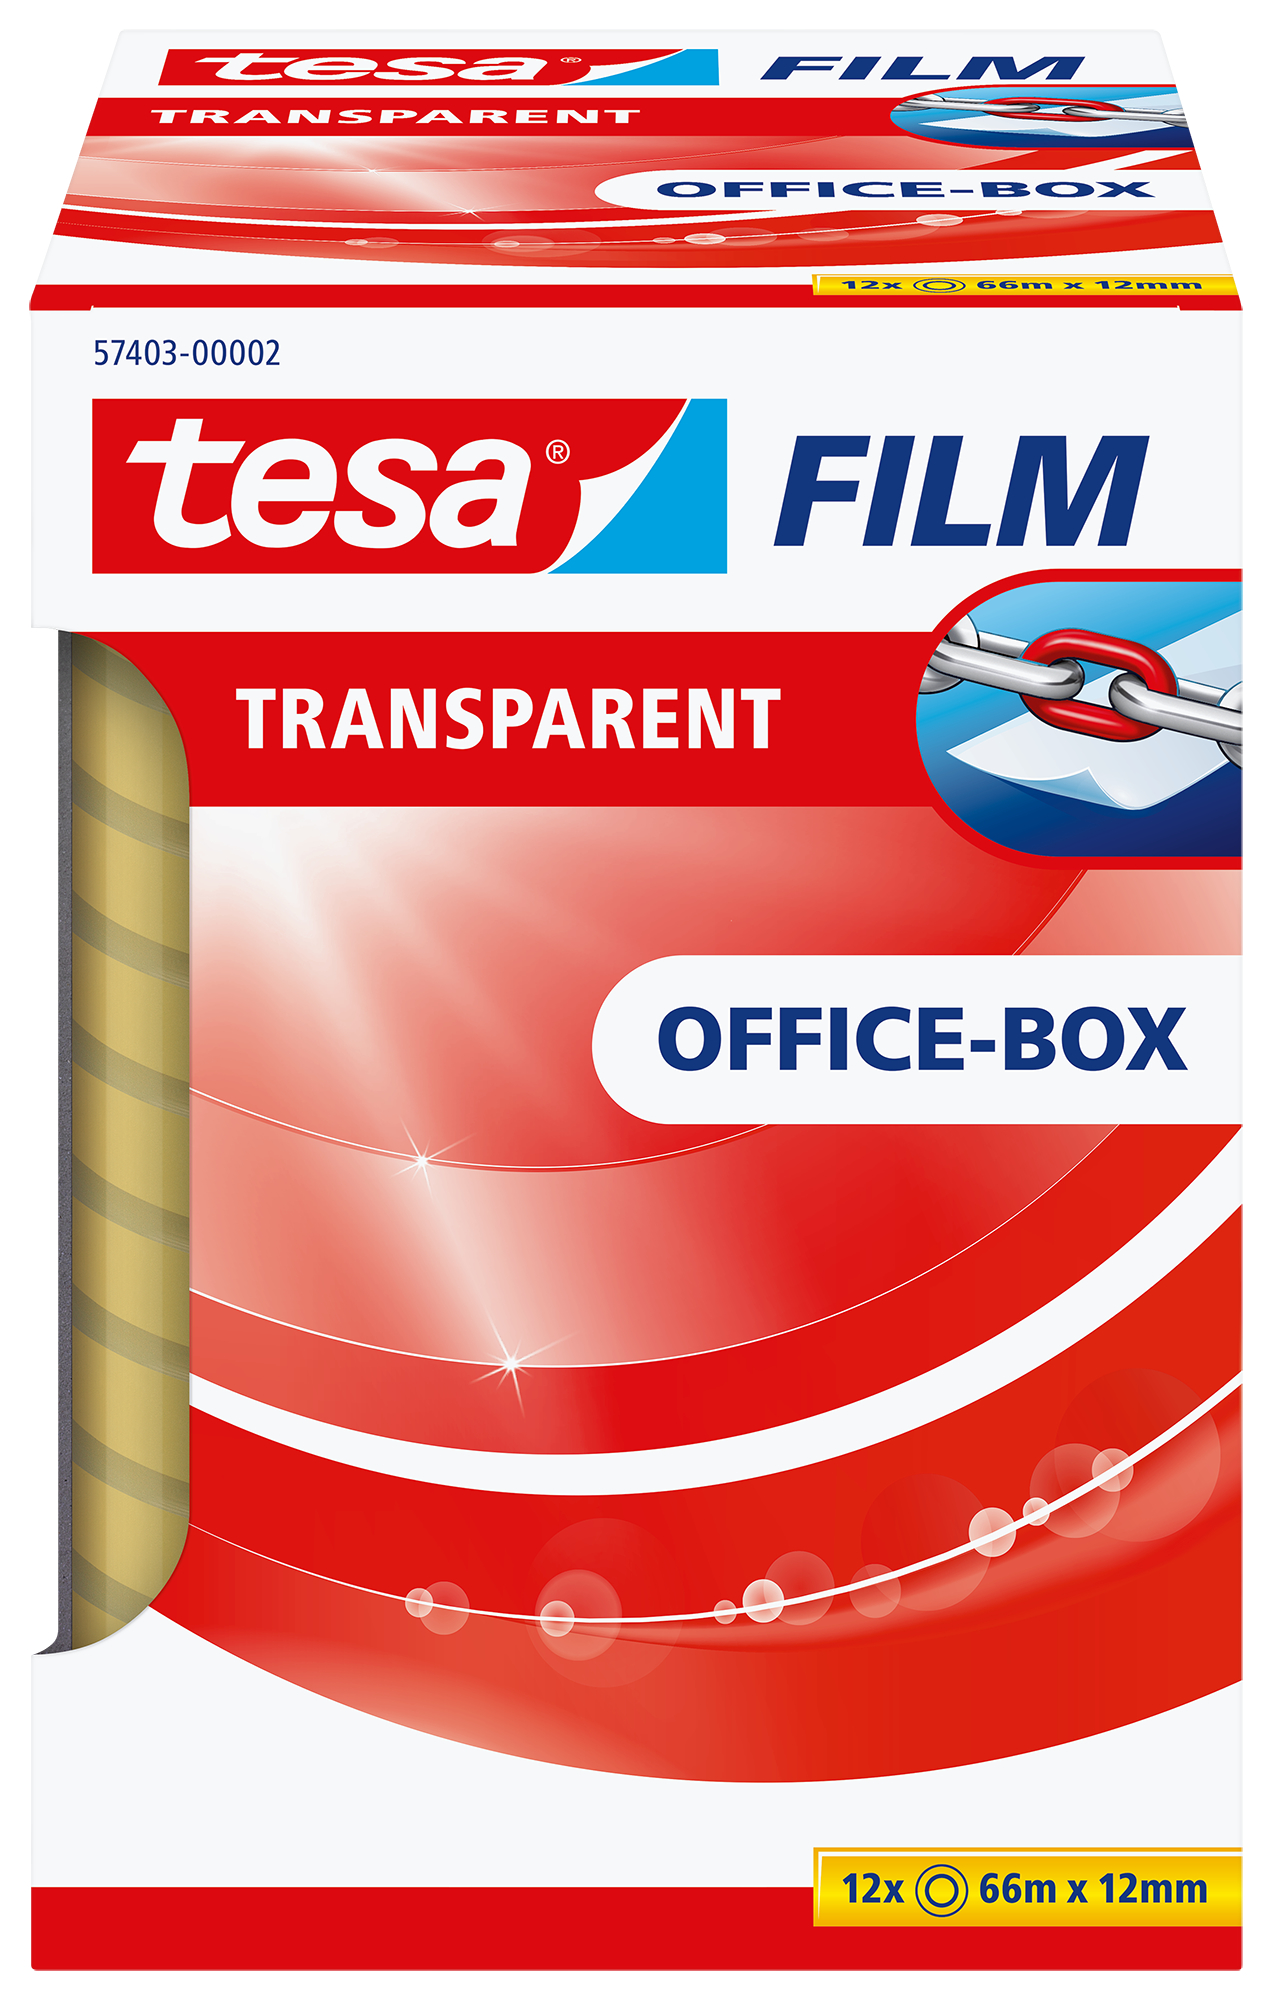 TESA Film OfficeBox 12mmx66m 574030000 Transparent 12 pcs. Transparent 12 pcs.